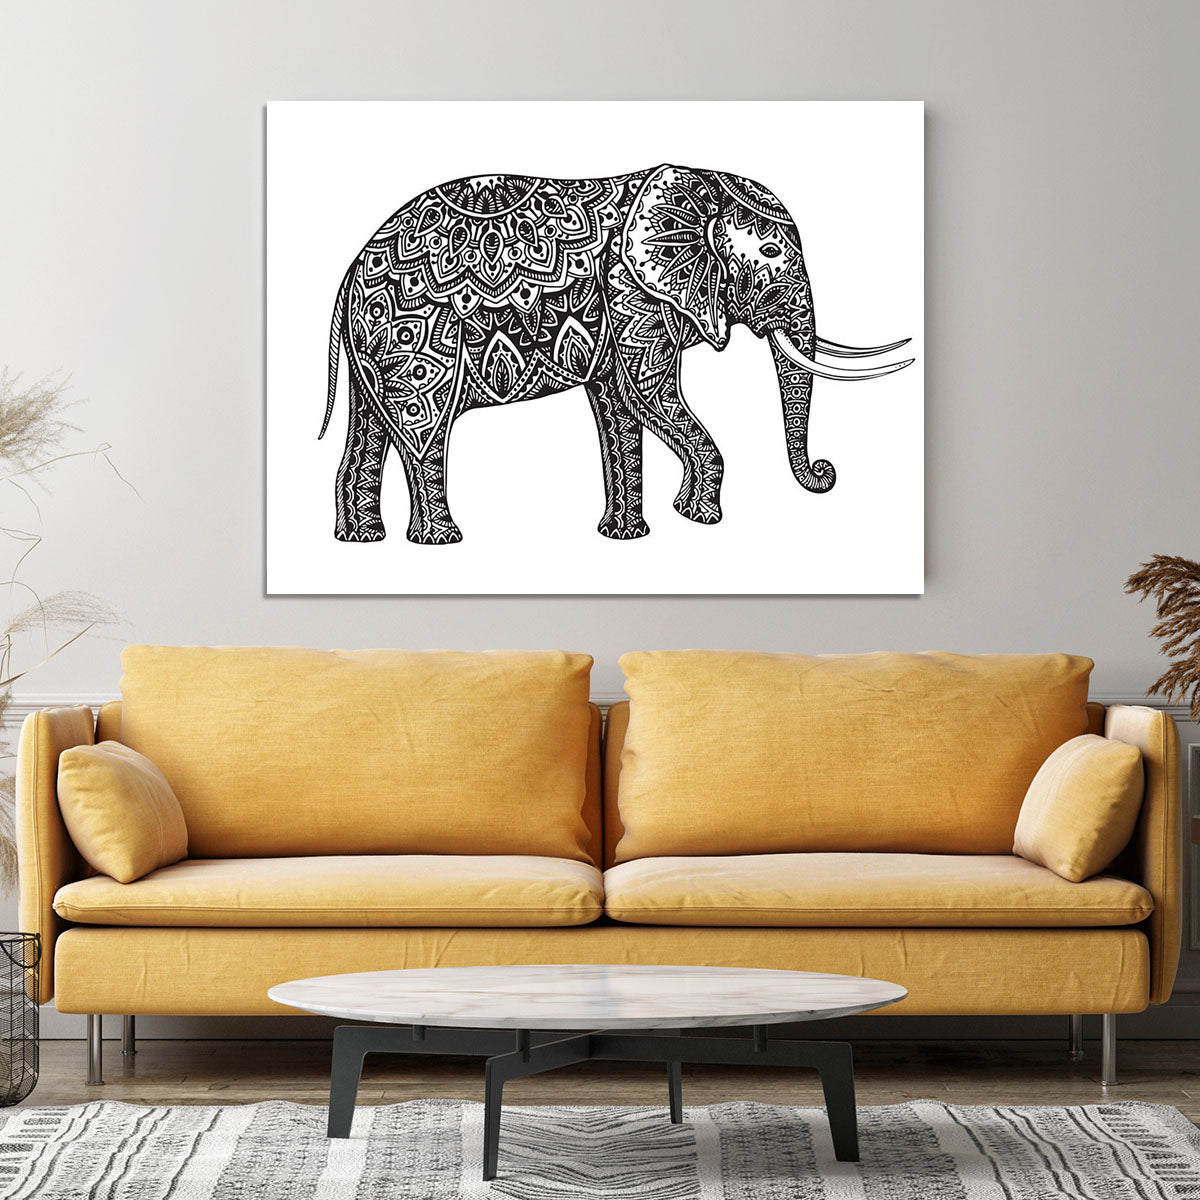 Stylized fantasy patterned elephant Canvas Print or Poster - Canvas Art Rocks - 4